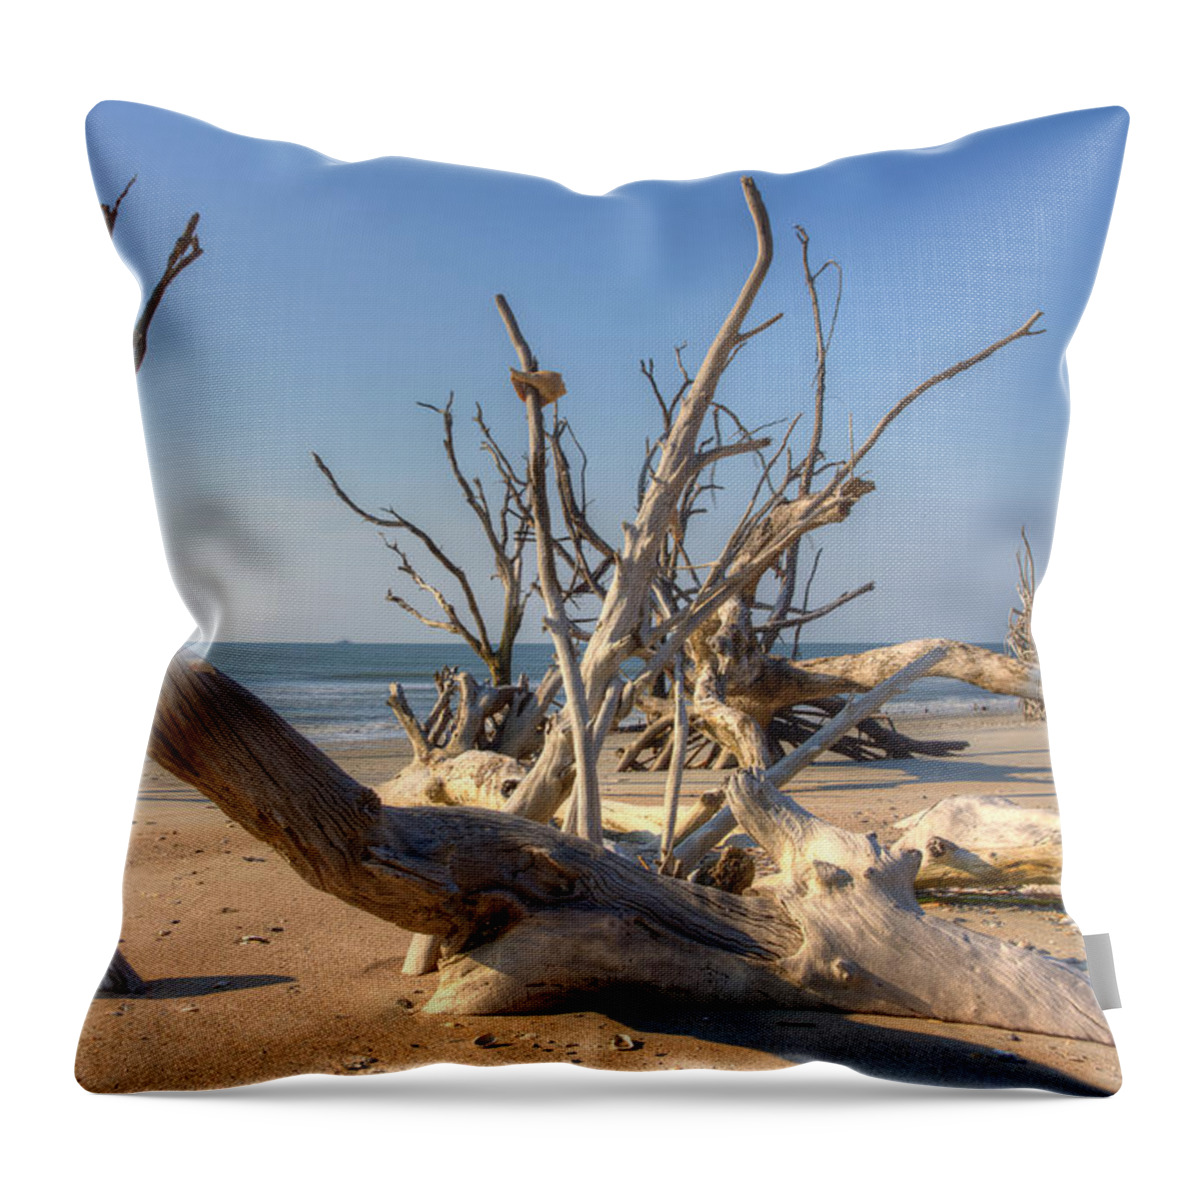 Botany Bay Plantation Throw Pillow featuring the photograph Boneyard Beach by Patricia Schaefer